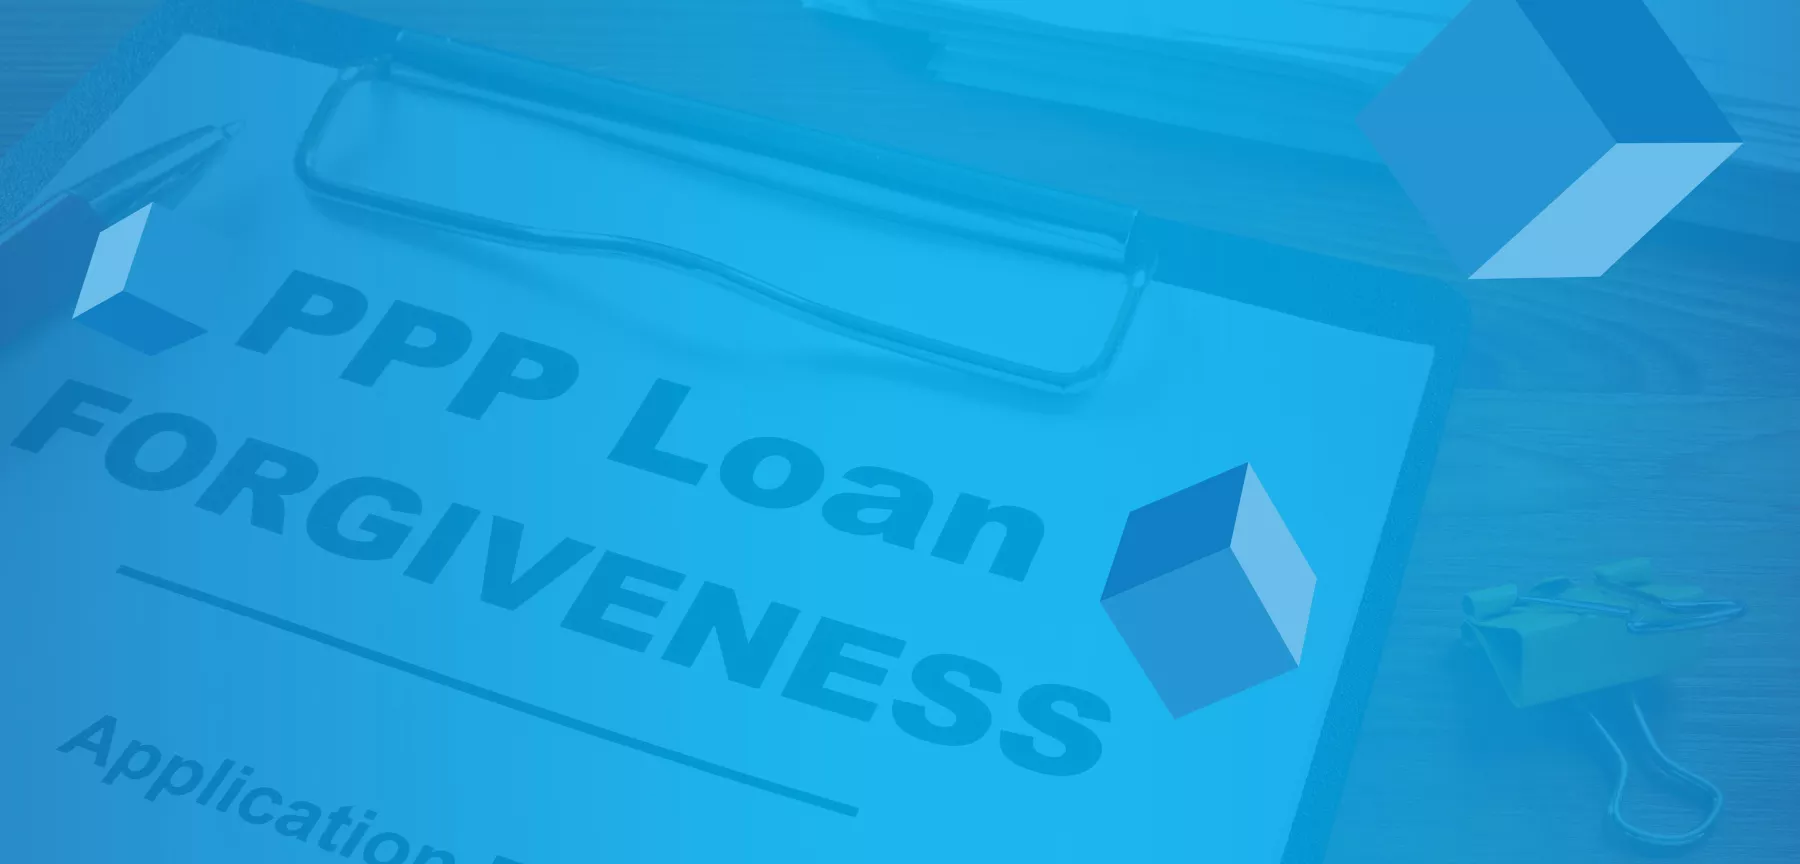 ppp loan forgiveness application image